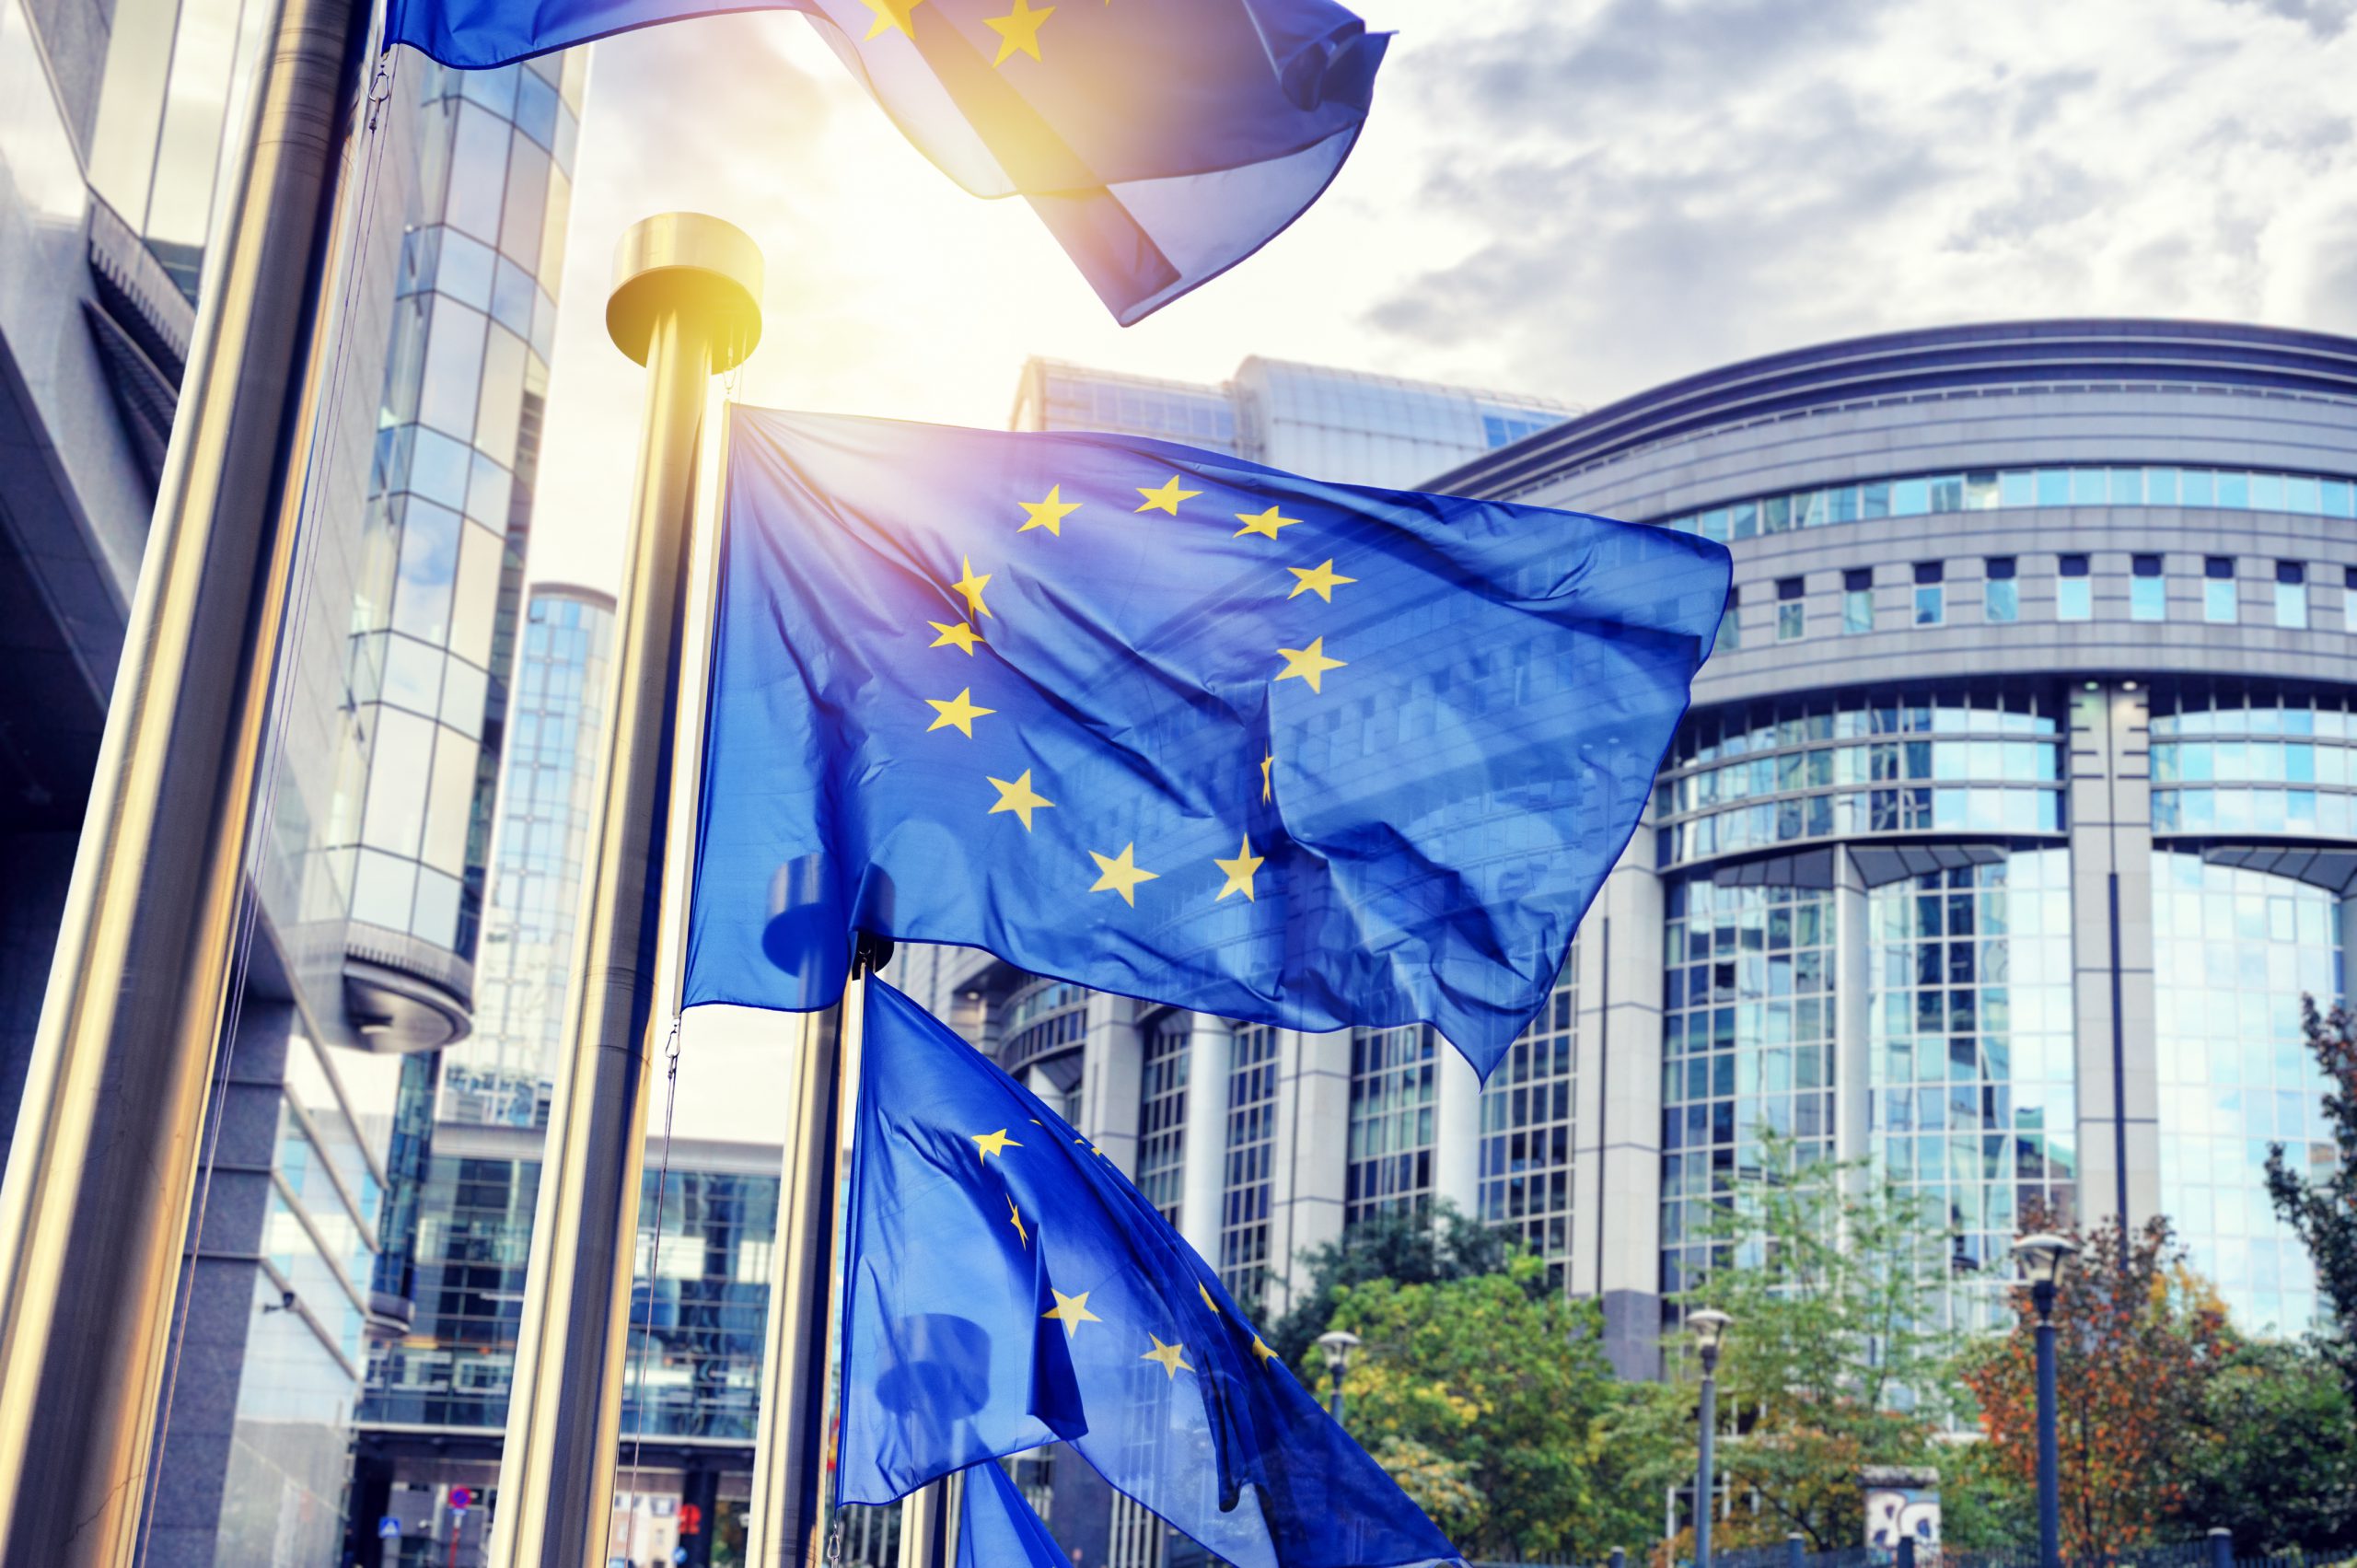 EU flags waving in front of European Parliament building. Brussels, Belgium